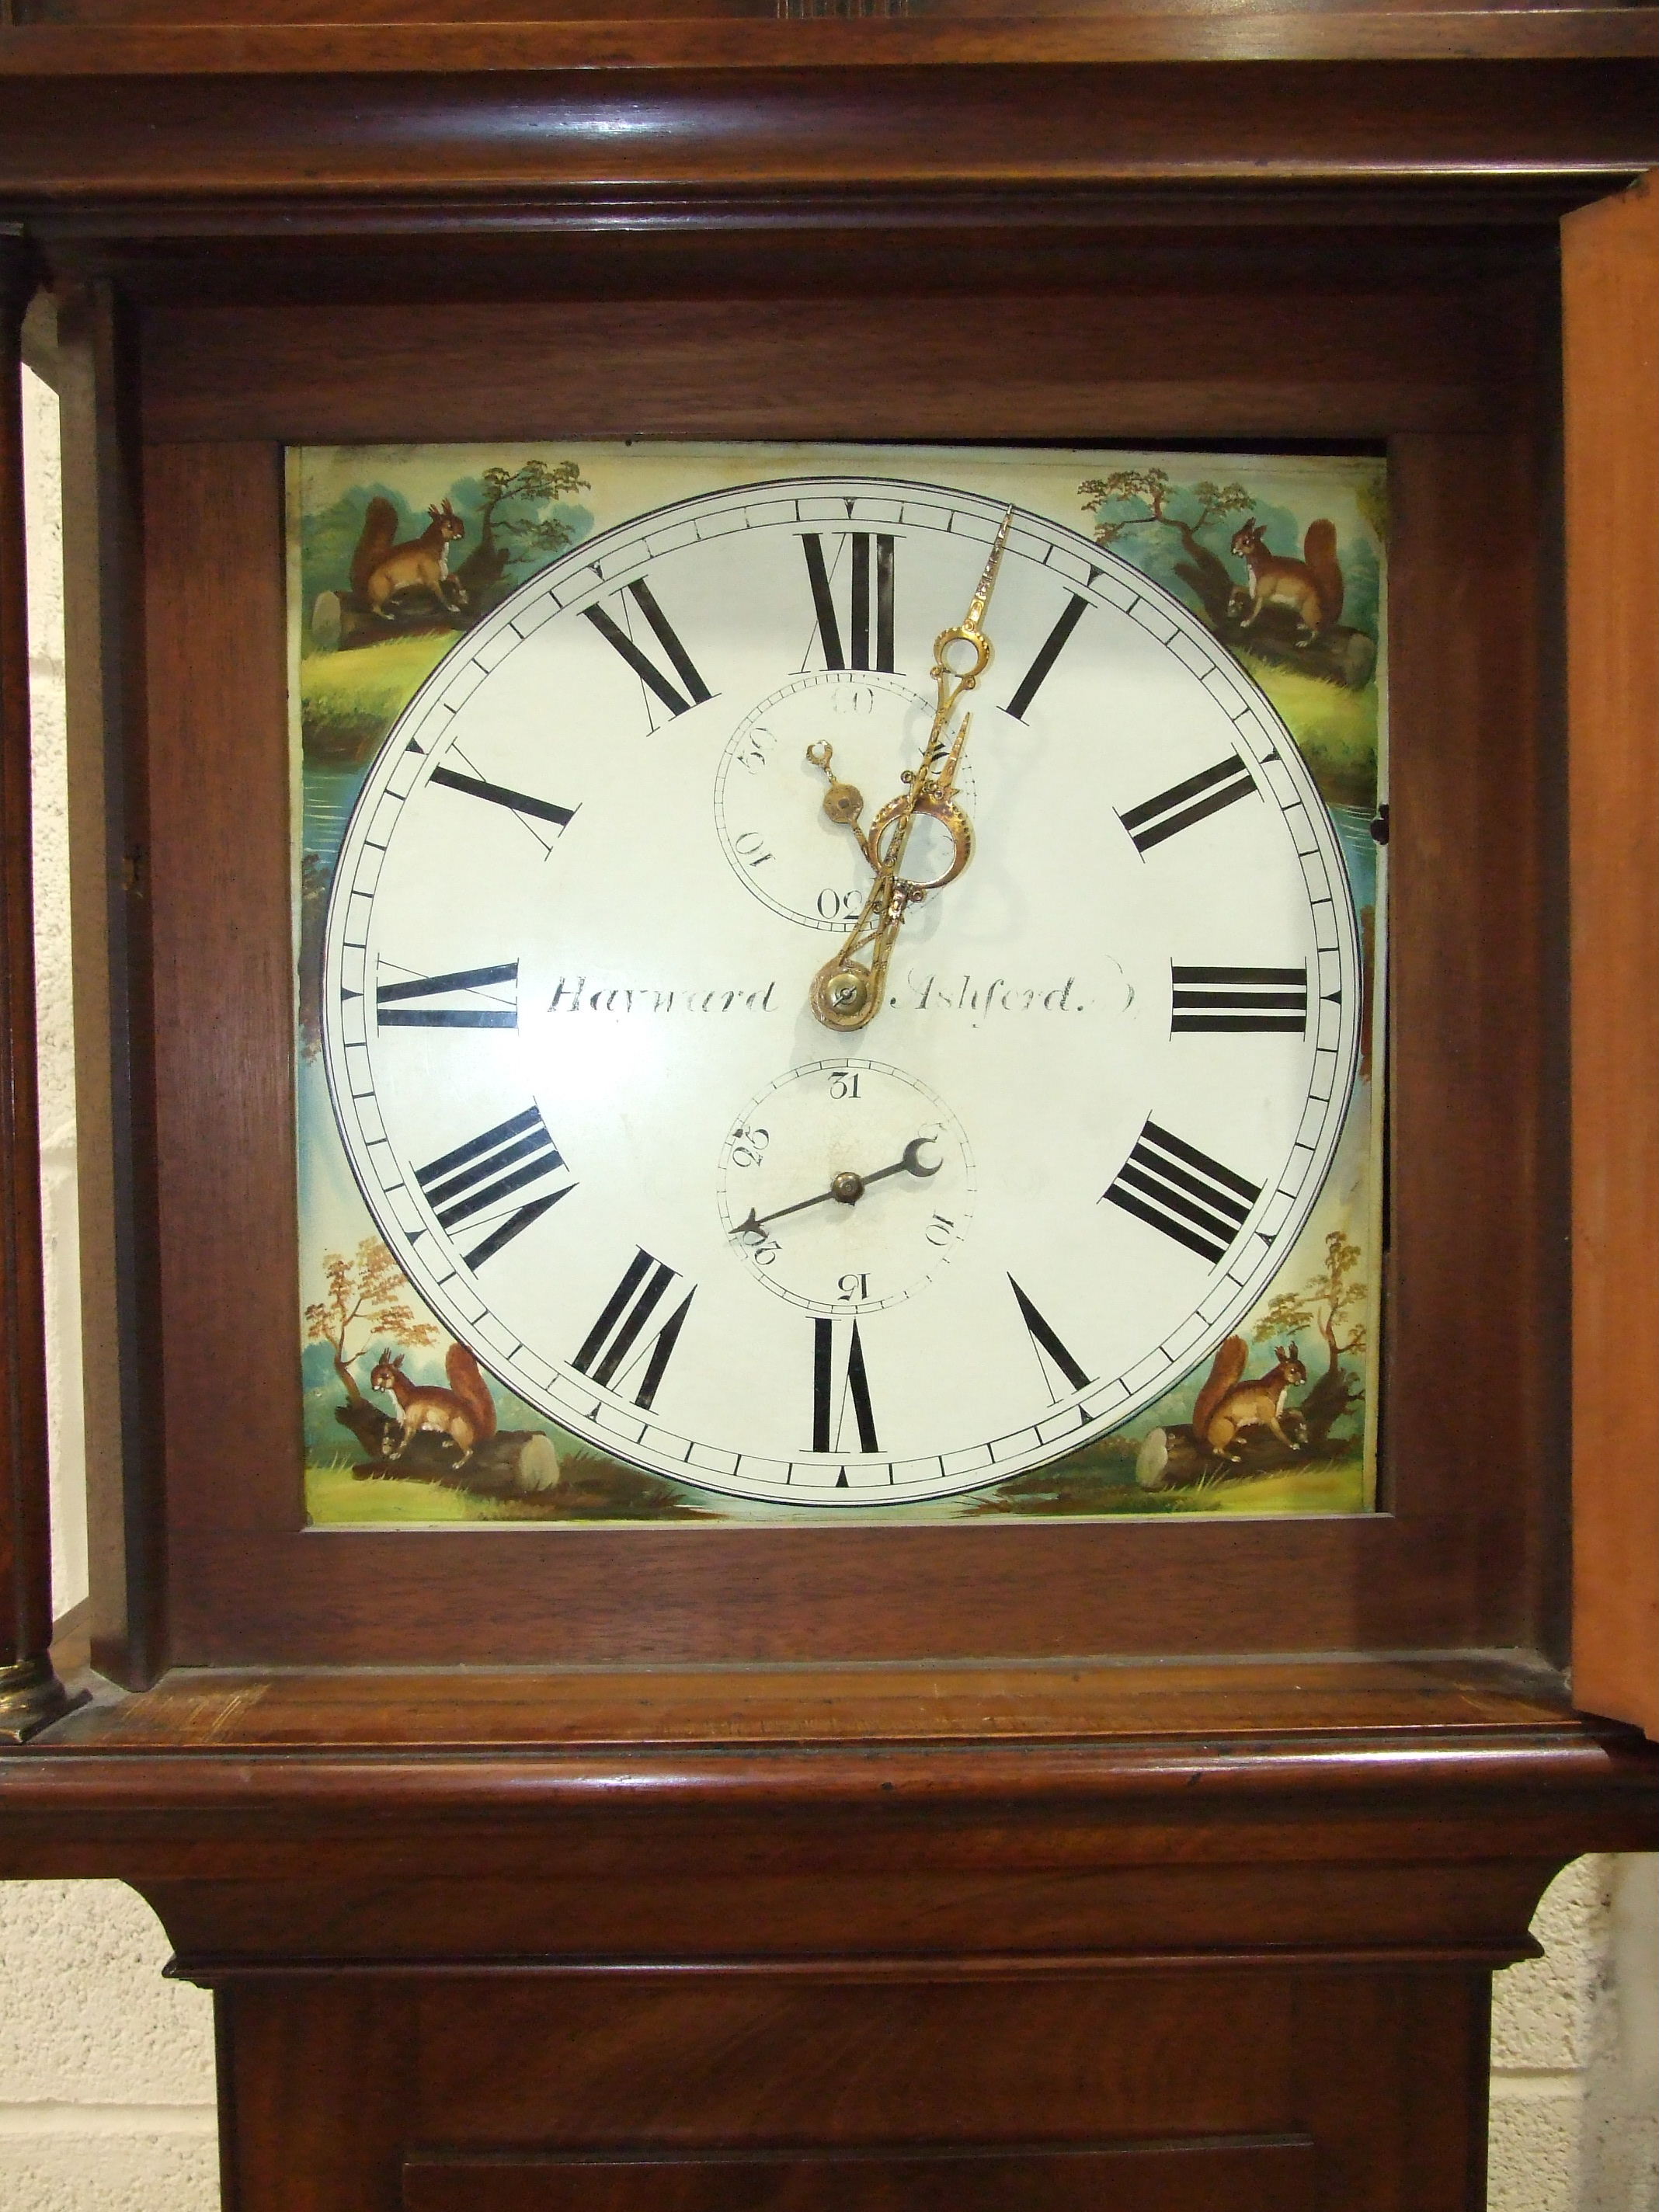 Hayward, Ashford, an antique mahogany longcase clock, the 36-hr chain-driven bell-striking